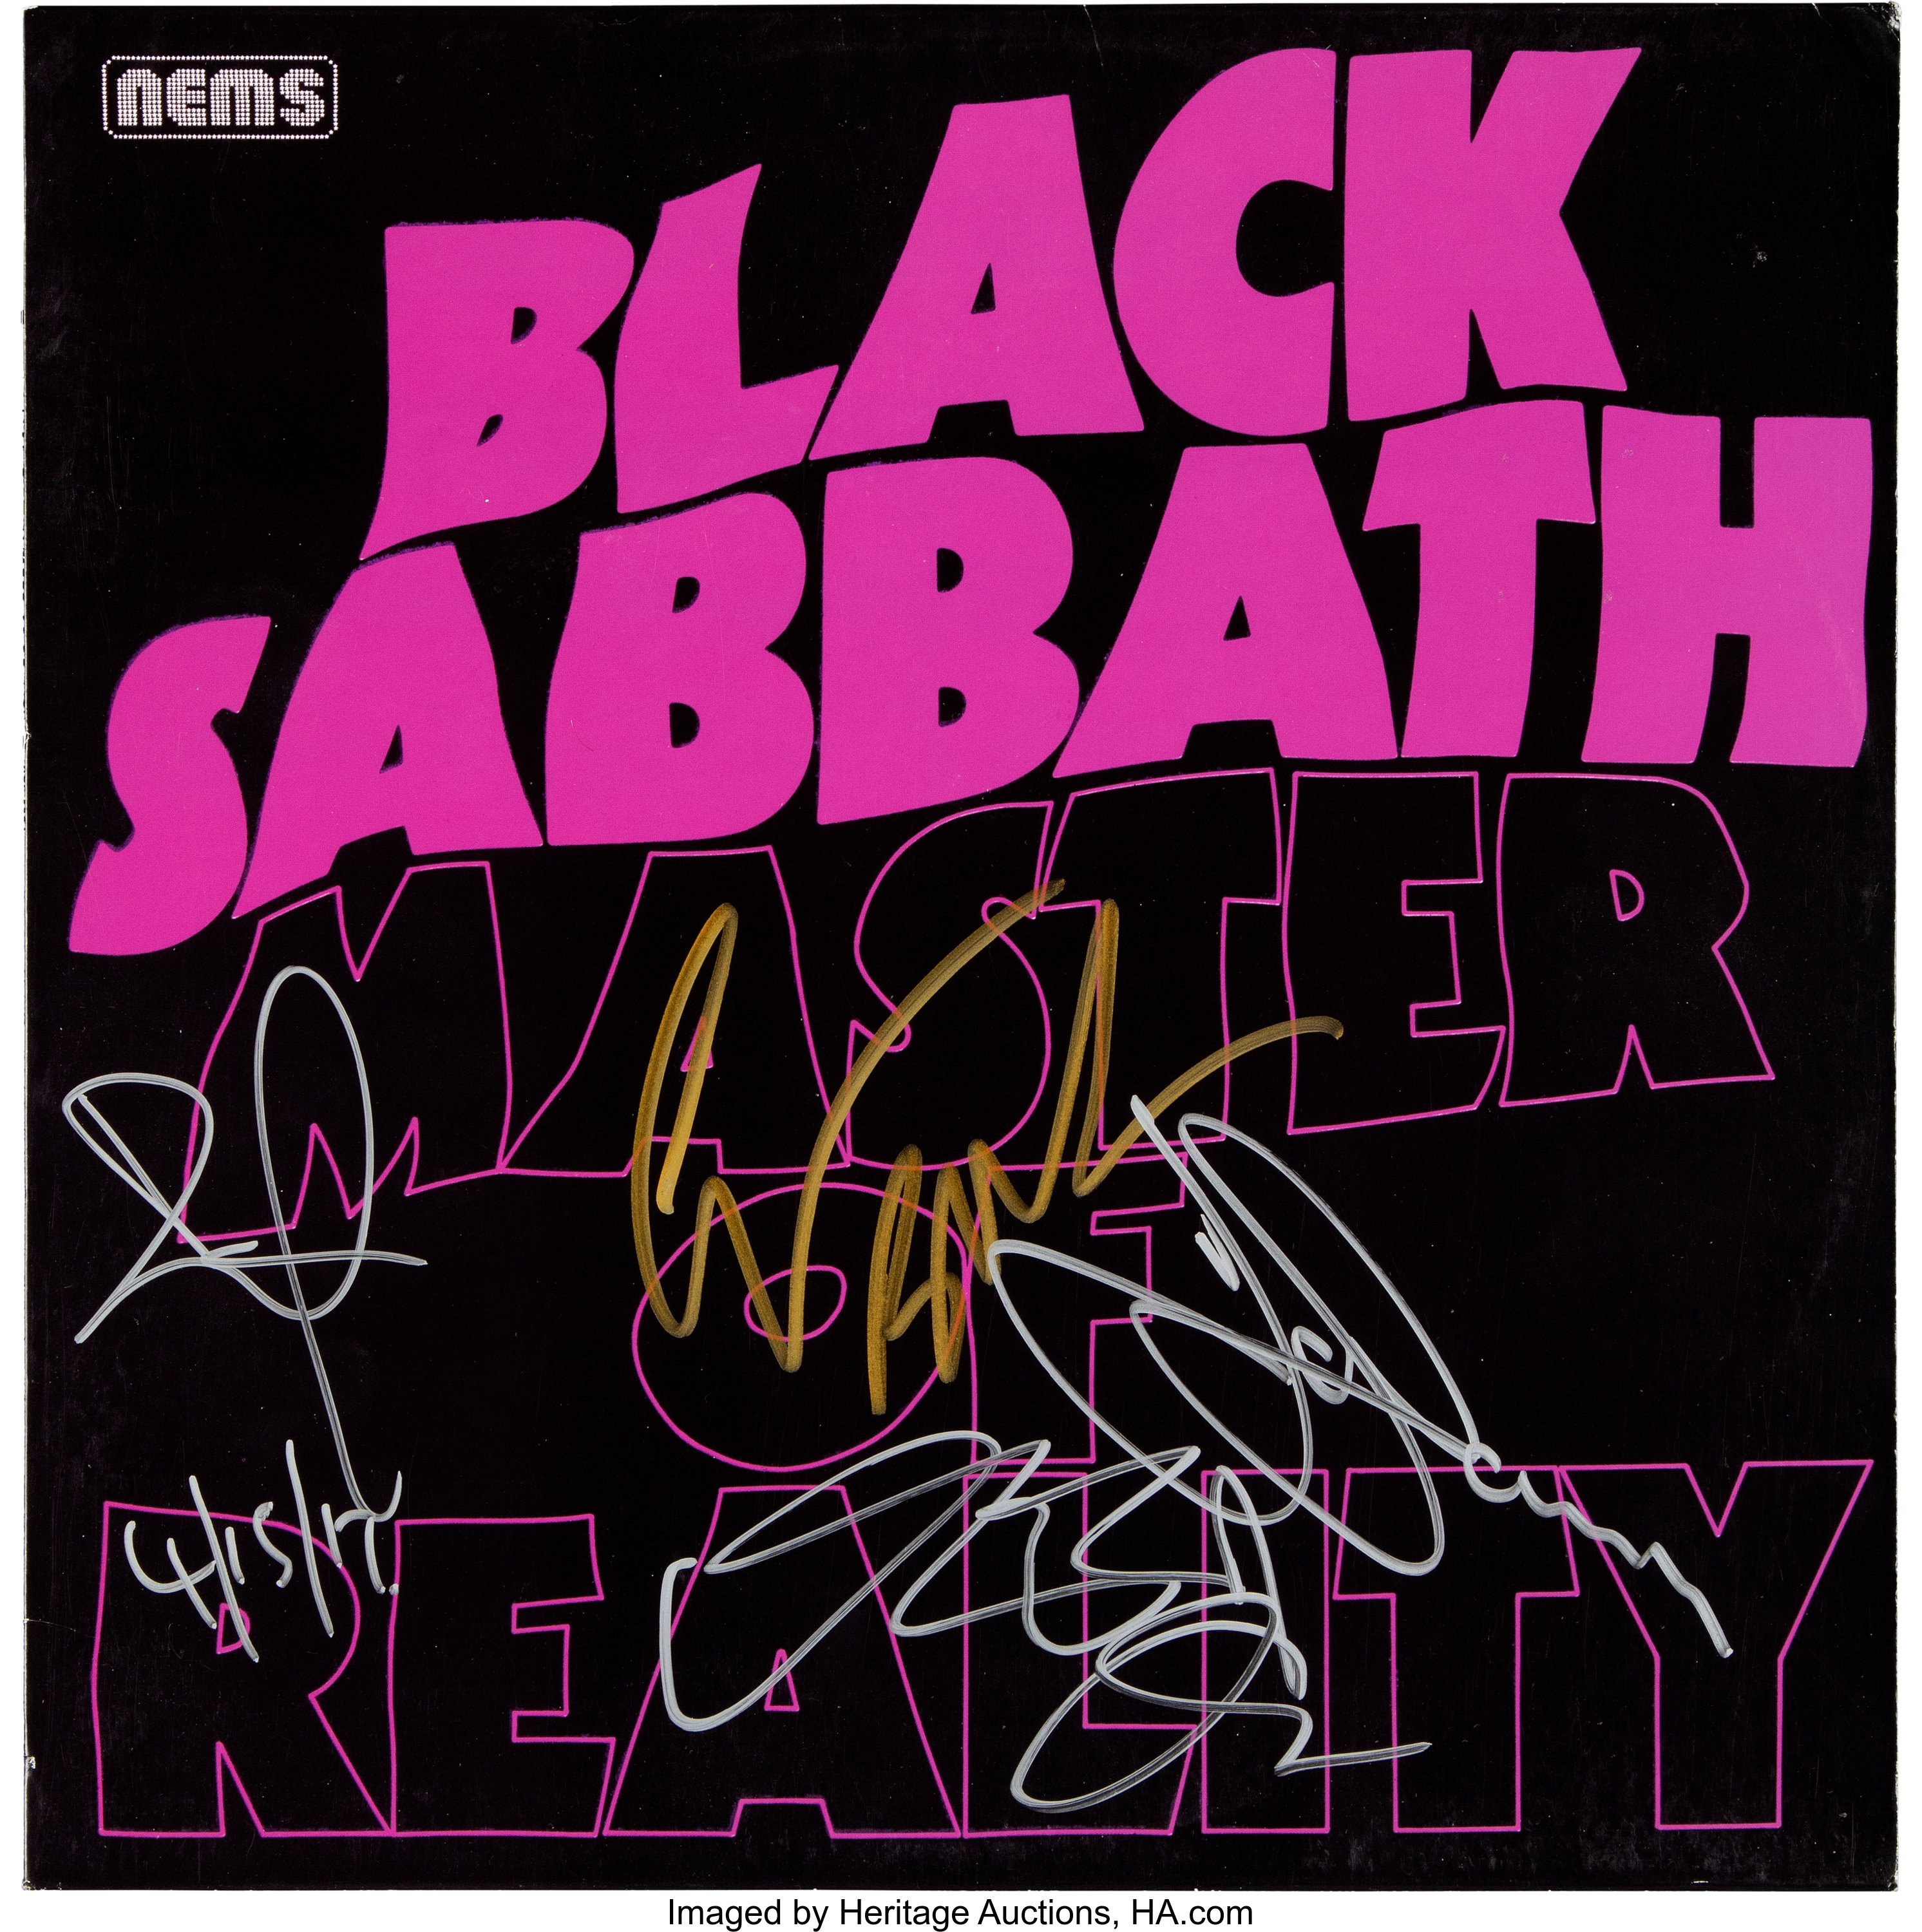 Black Sabbath of Reality Vinyl LP Signed By Original | Lot #89359 | Heritage Auctions